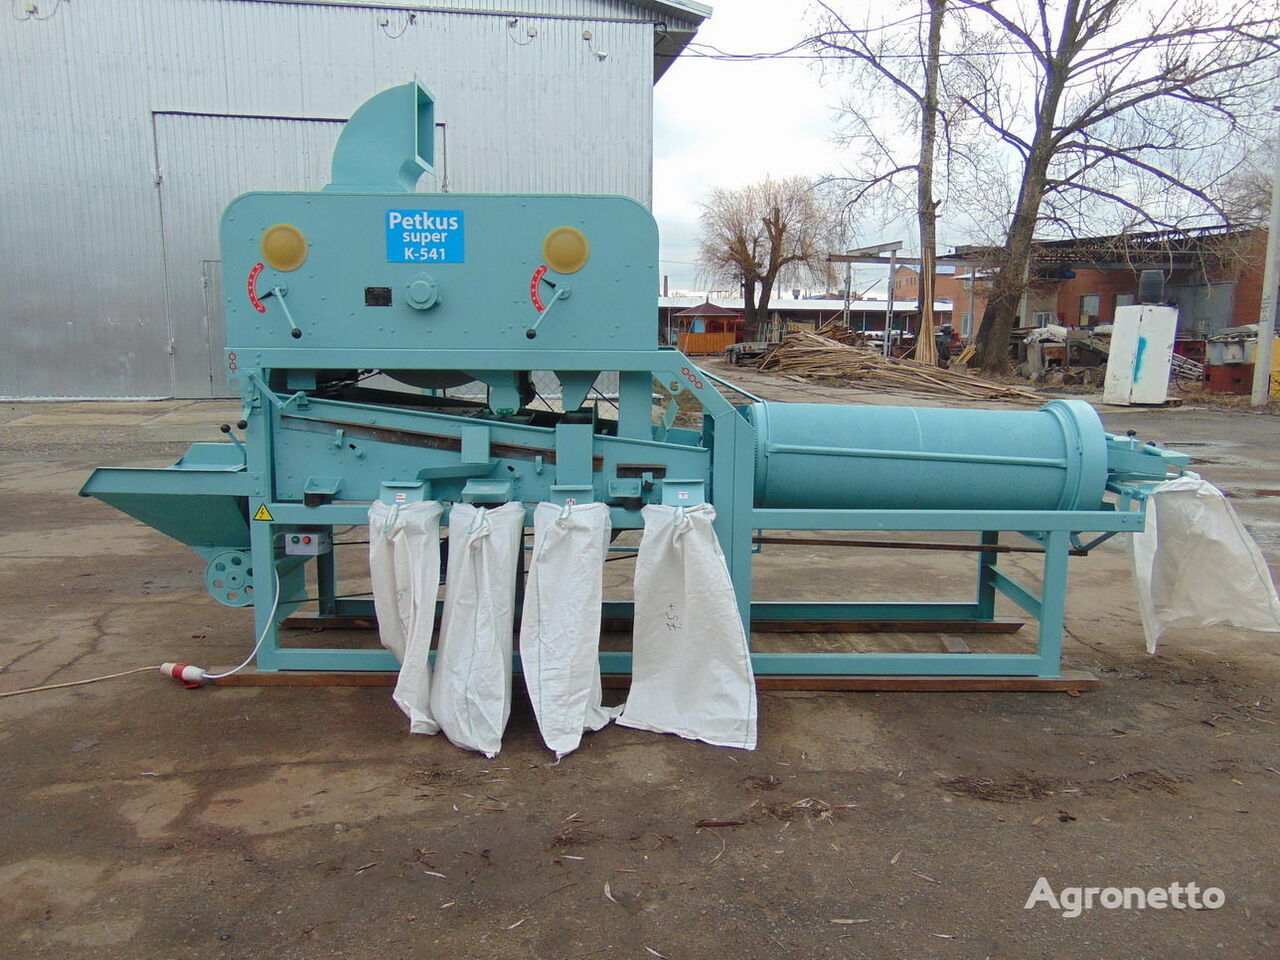 Petkus K-541 grain cleaner